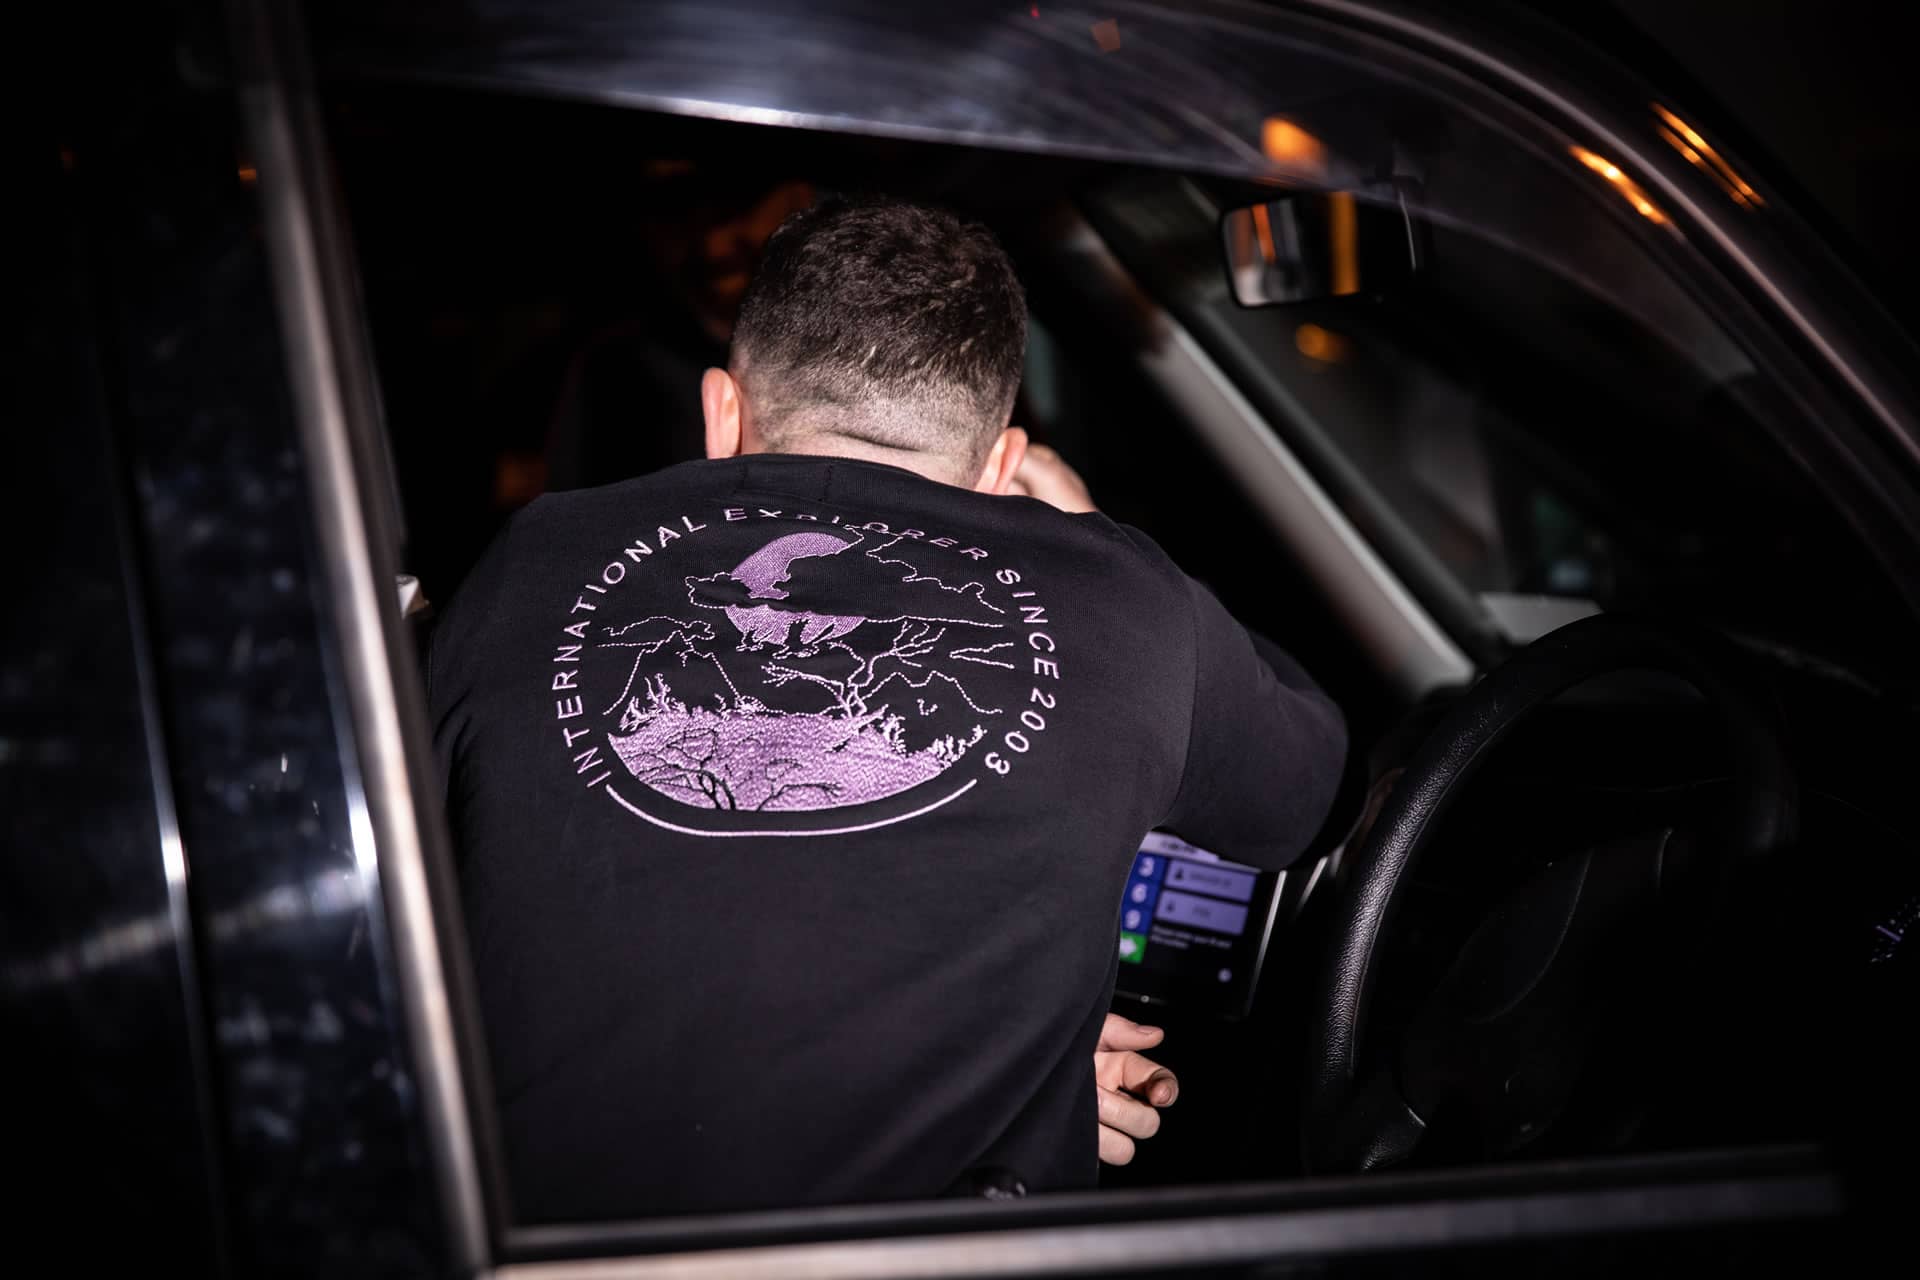 Cabbie wears King Apparel Explorer sweatshirt in black